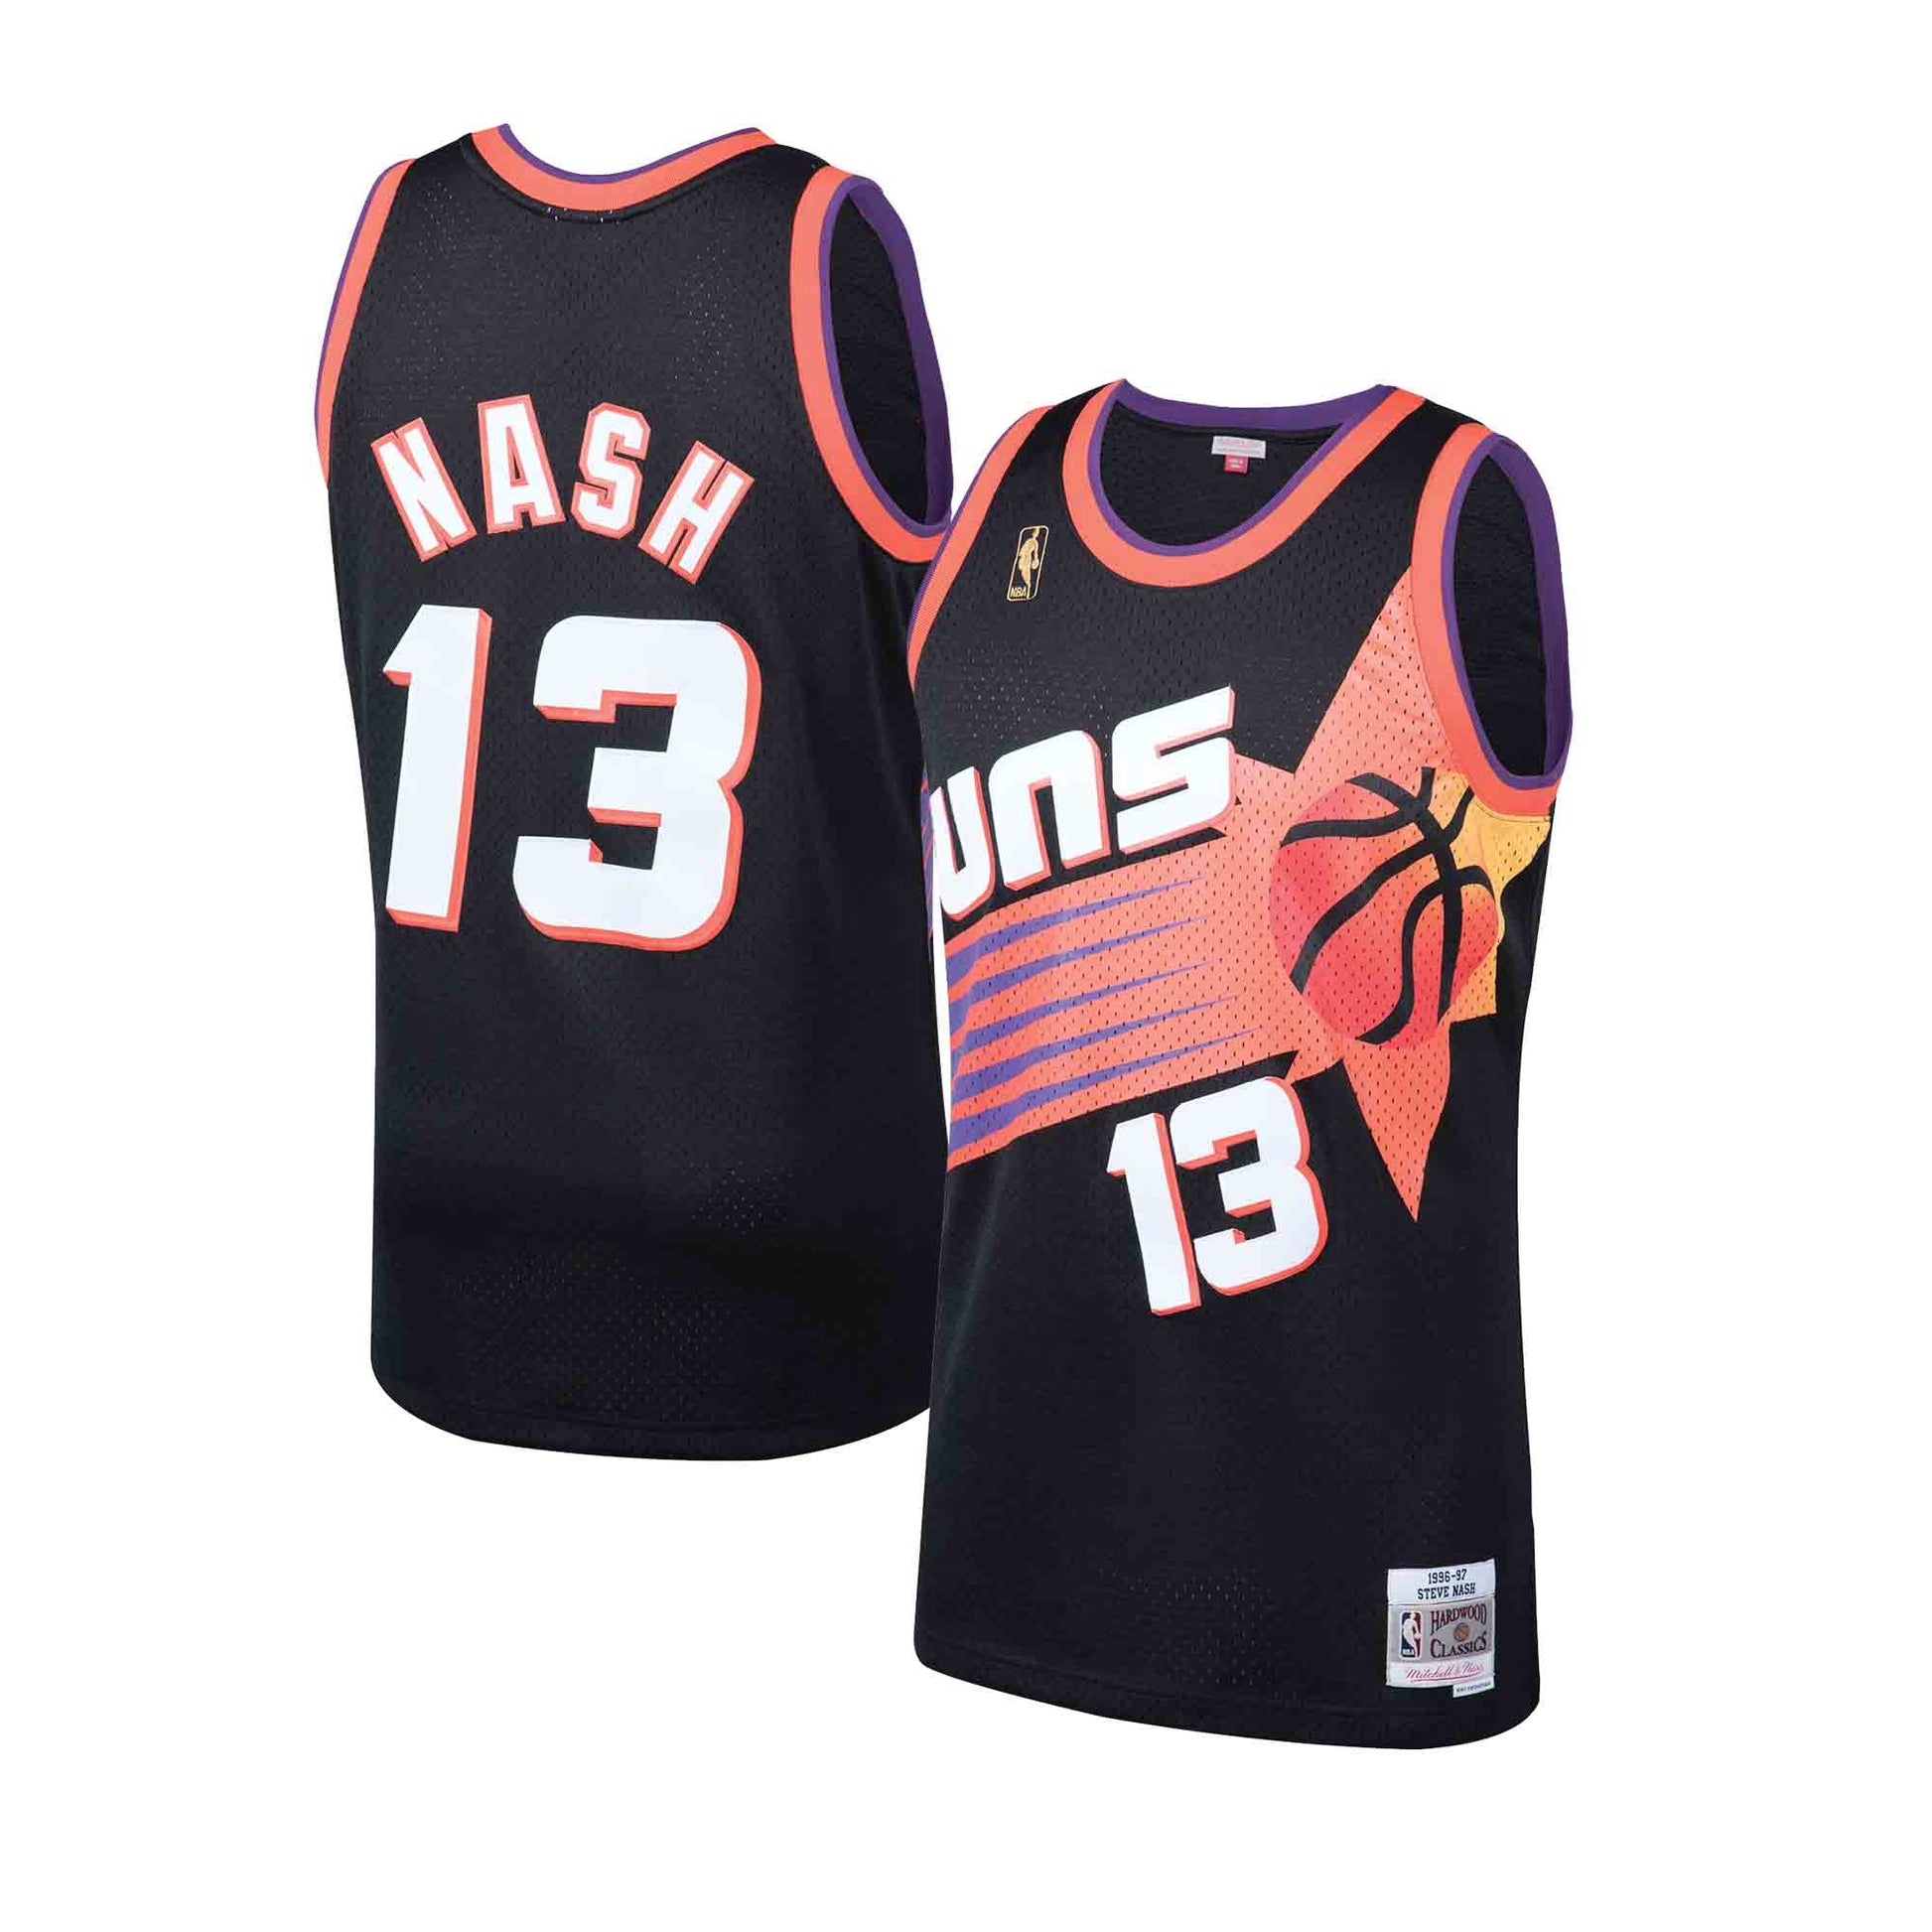 NBA, Shirts, Phoenix Suns Steve Nash 3 Nba Classic White Jersey